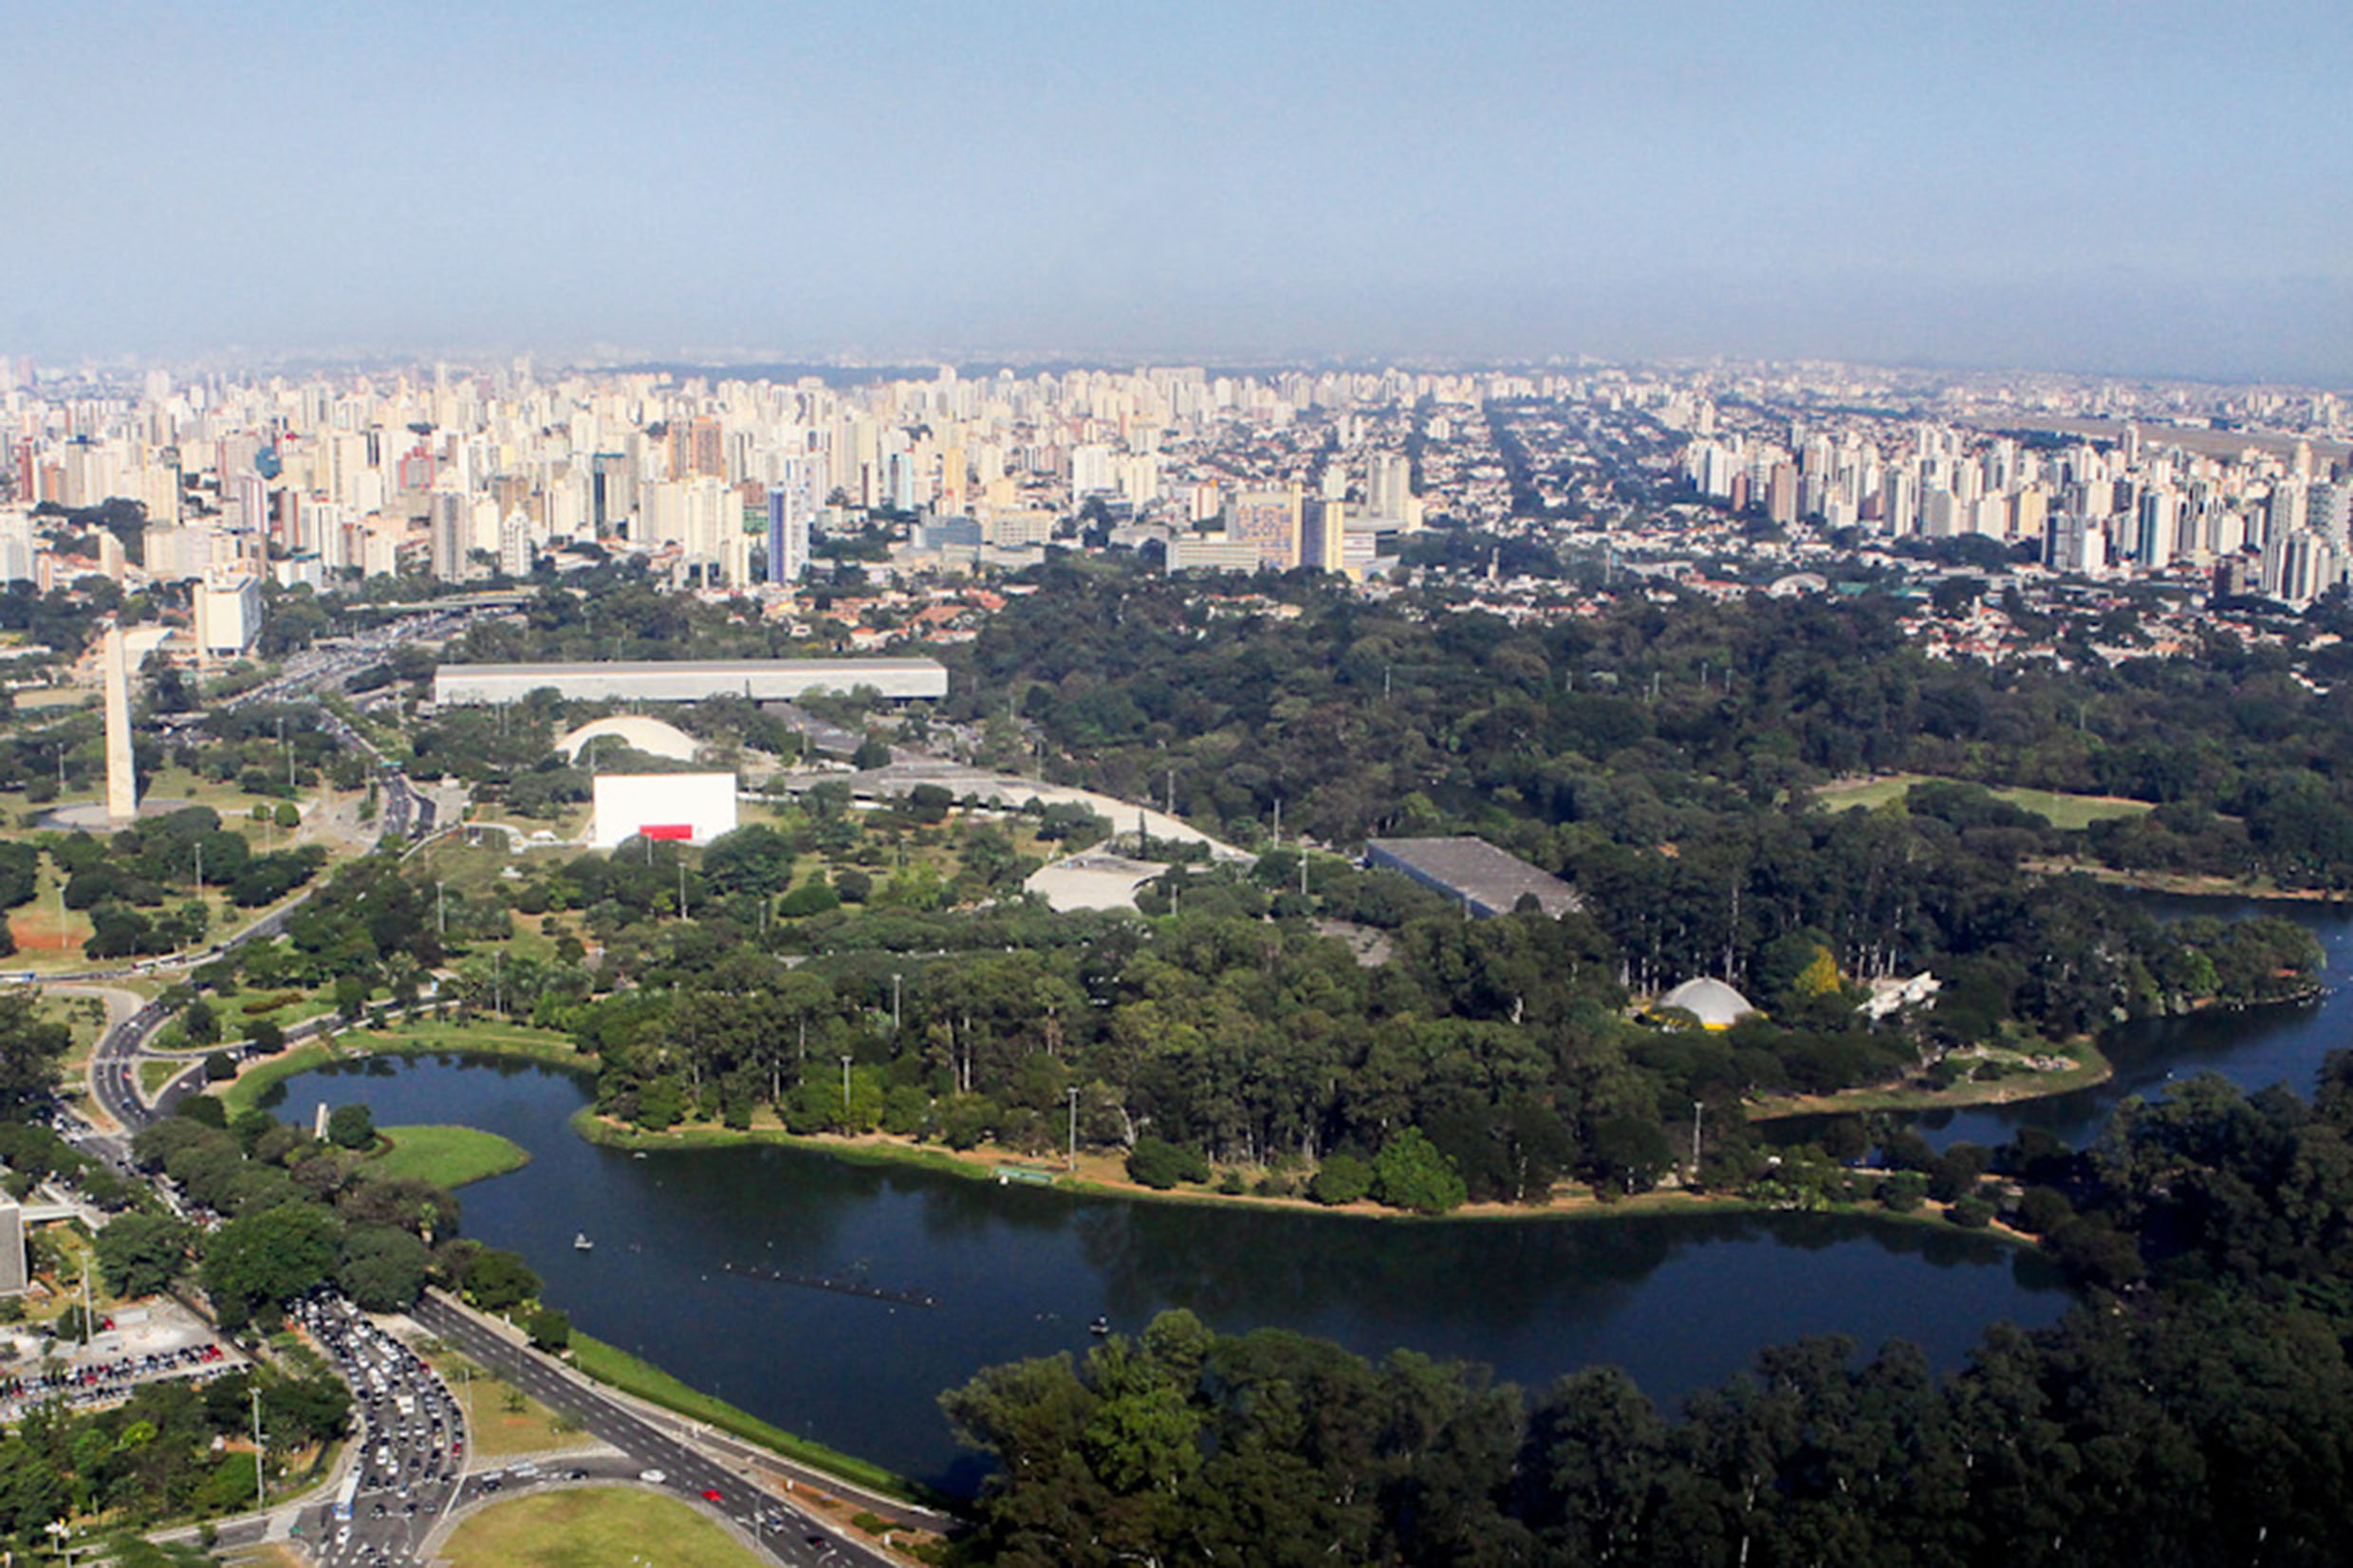 Parque do Ibirapuera - Foto: Caio Pimenta<a style='float:right;color:#ccc' href='https://www3.al.sp.gov.br/repositorio/noticia/N-01-2021/fg260024.jpg' target=_blank><i class='bi bi-zoom-in'></i> Clique para ver a imagem </a>